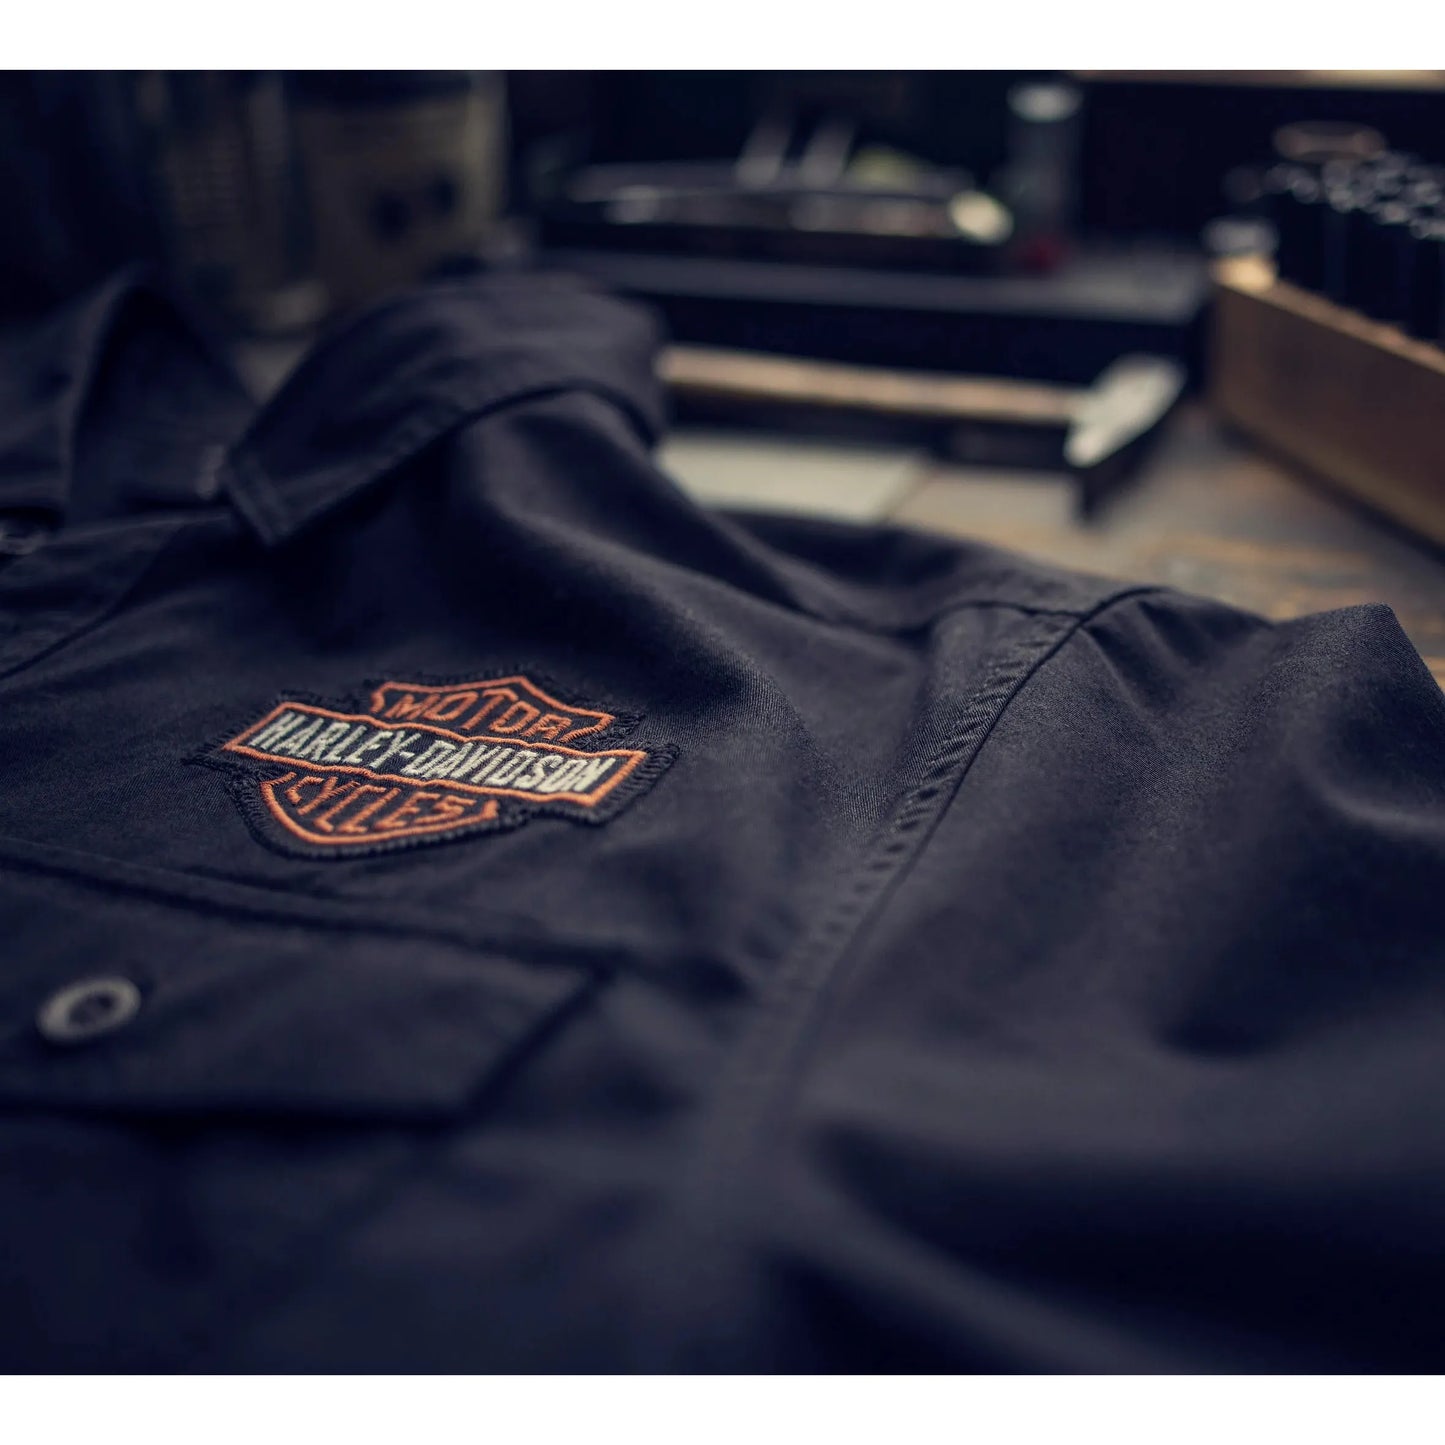 Harley-Davidson® Play Men's Bar & Shield Short Sleeve Shirt - Black Beauty